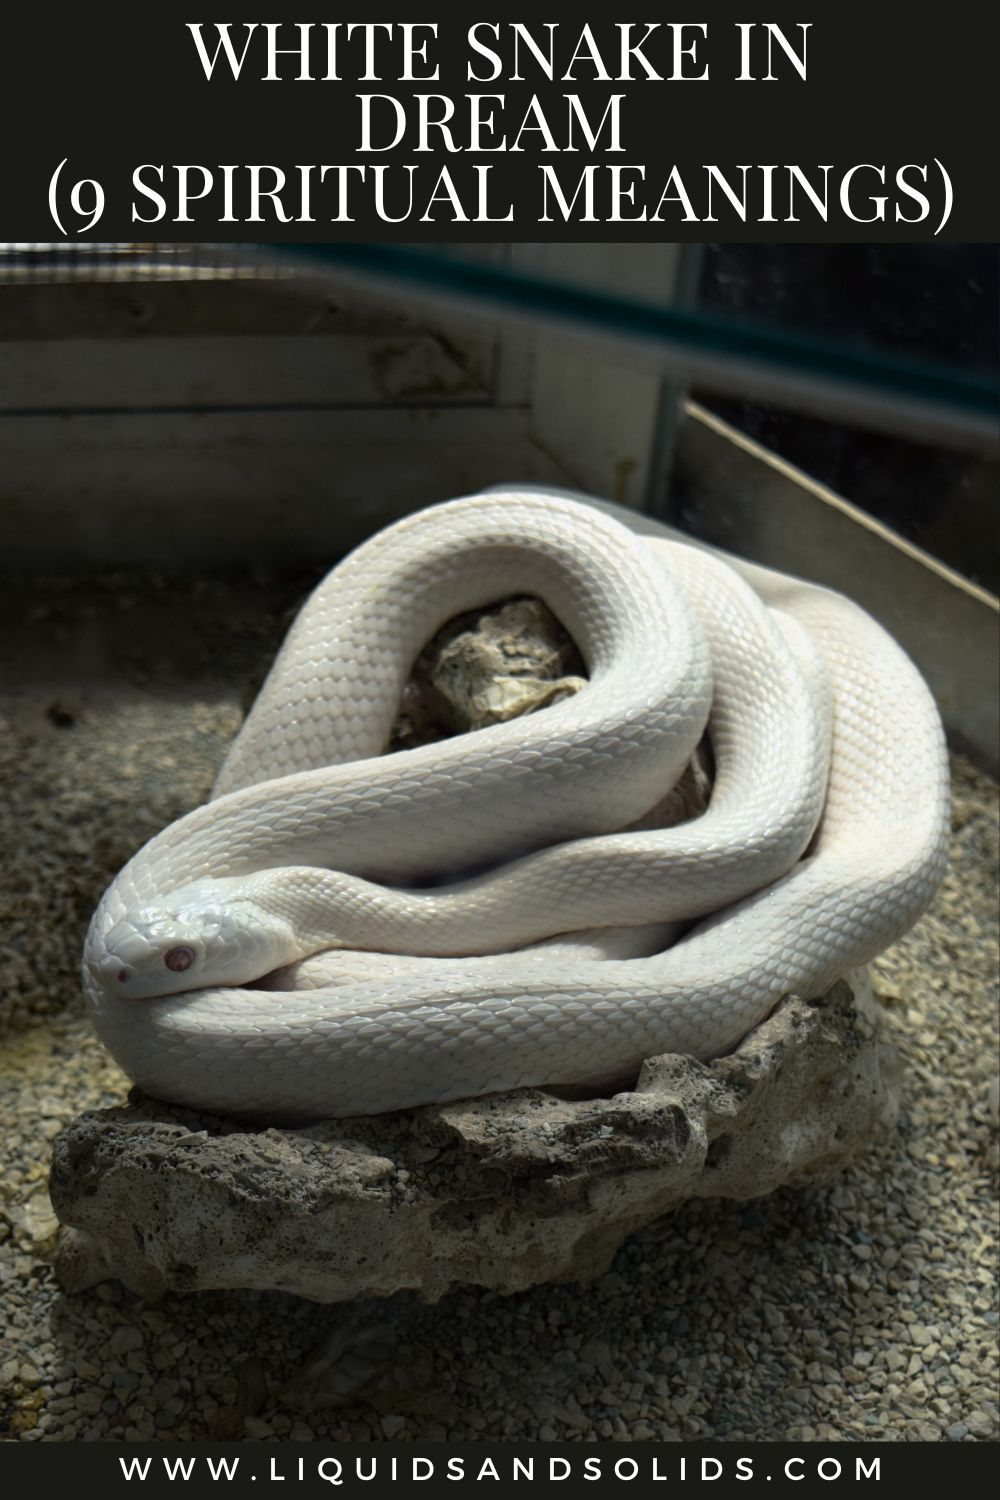 White Snake As A Messenger